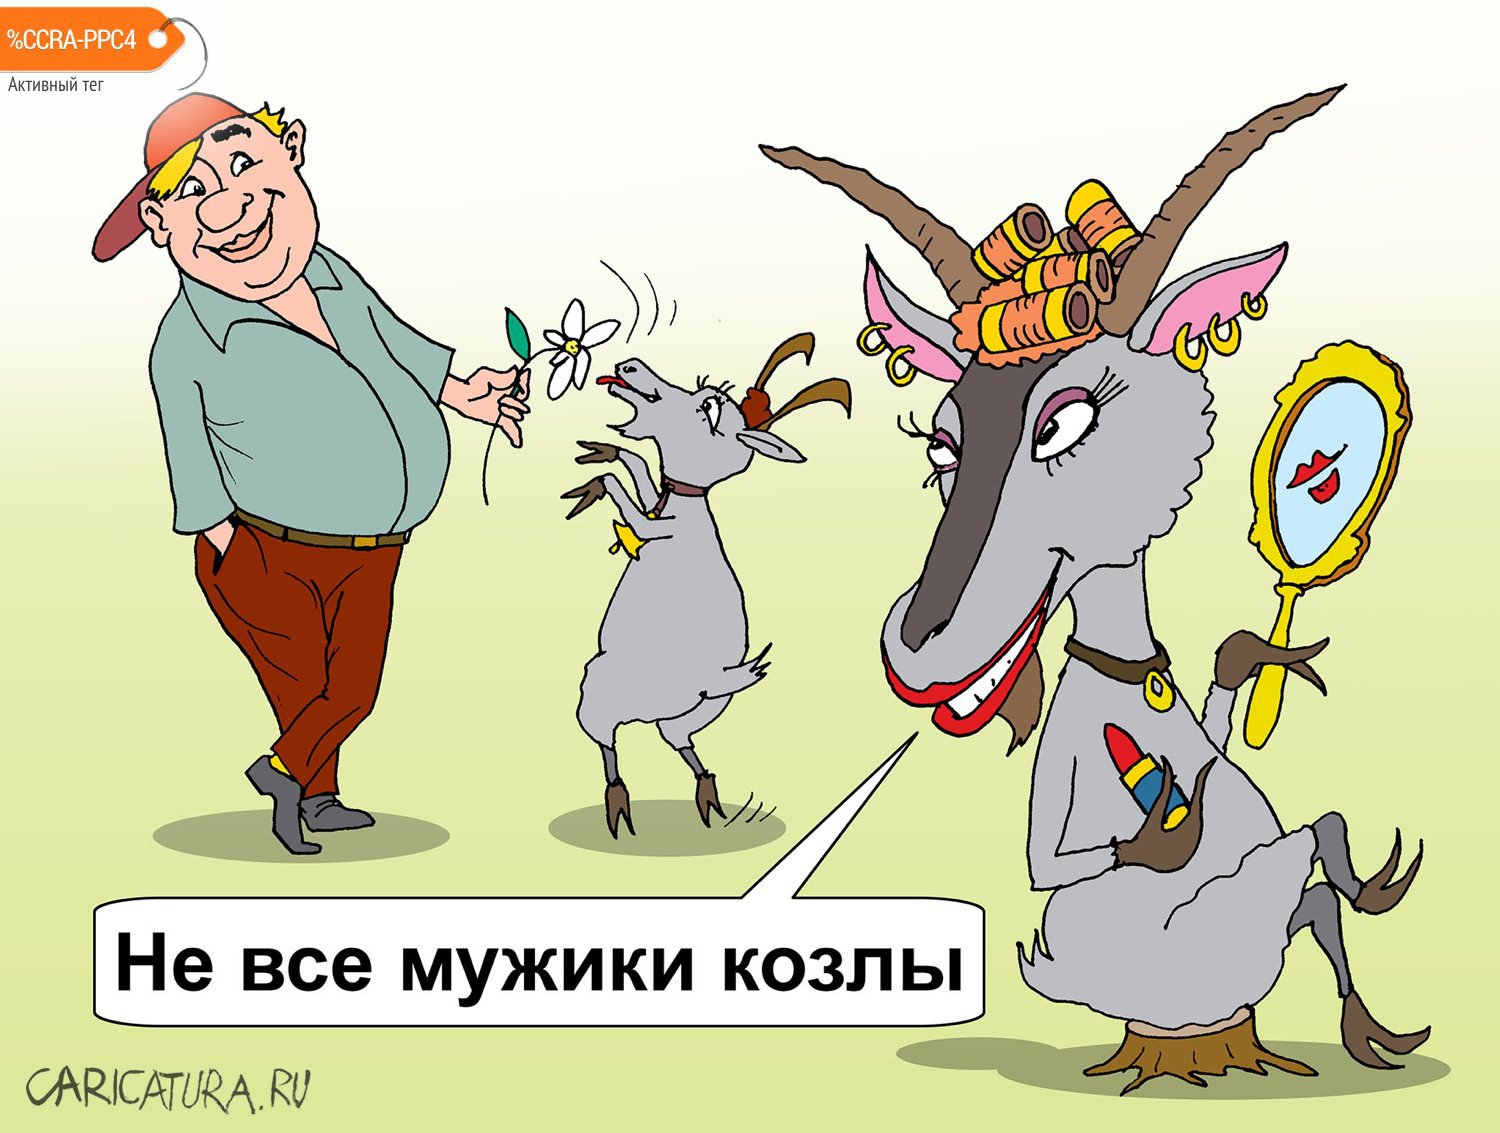 Карикатура "Все мужики козлы", Евгений Кран